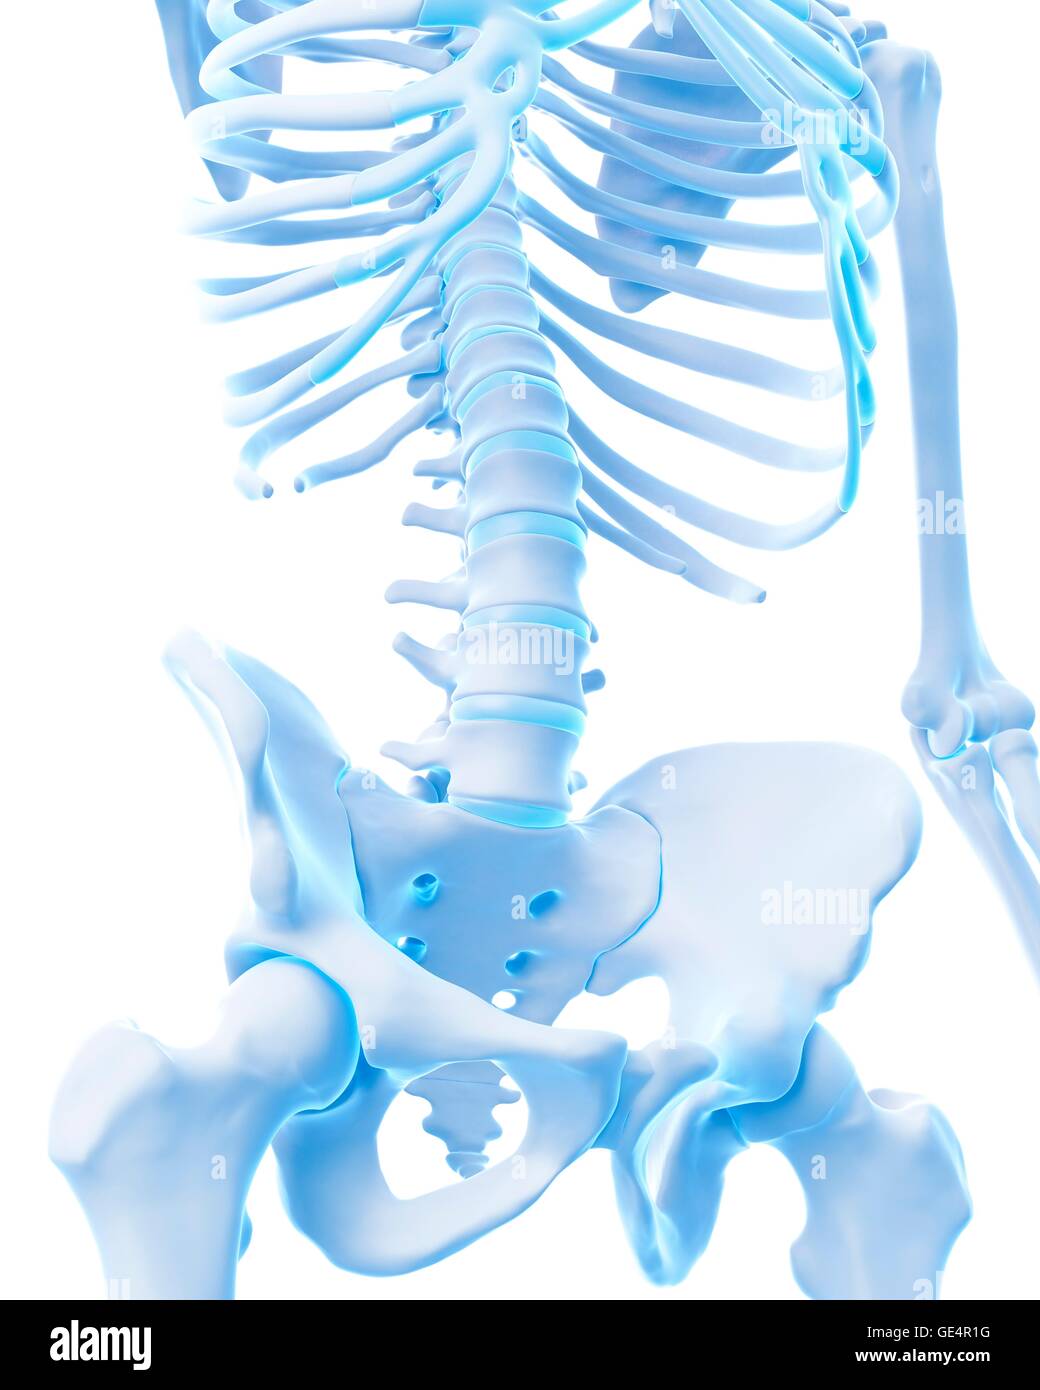 Human pelvis, illustration. Stock Photo